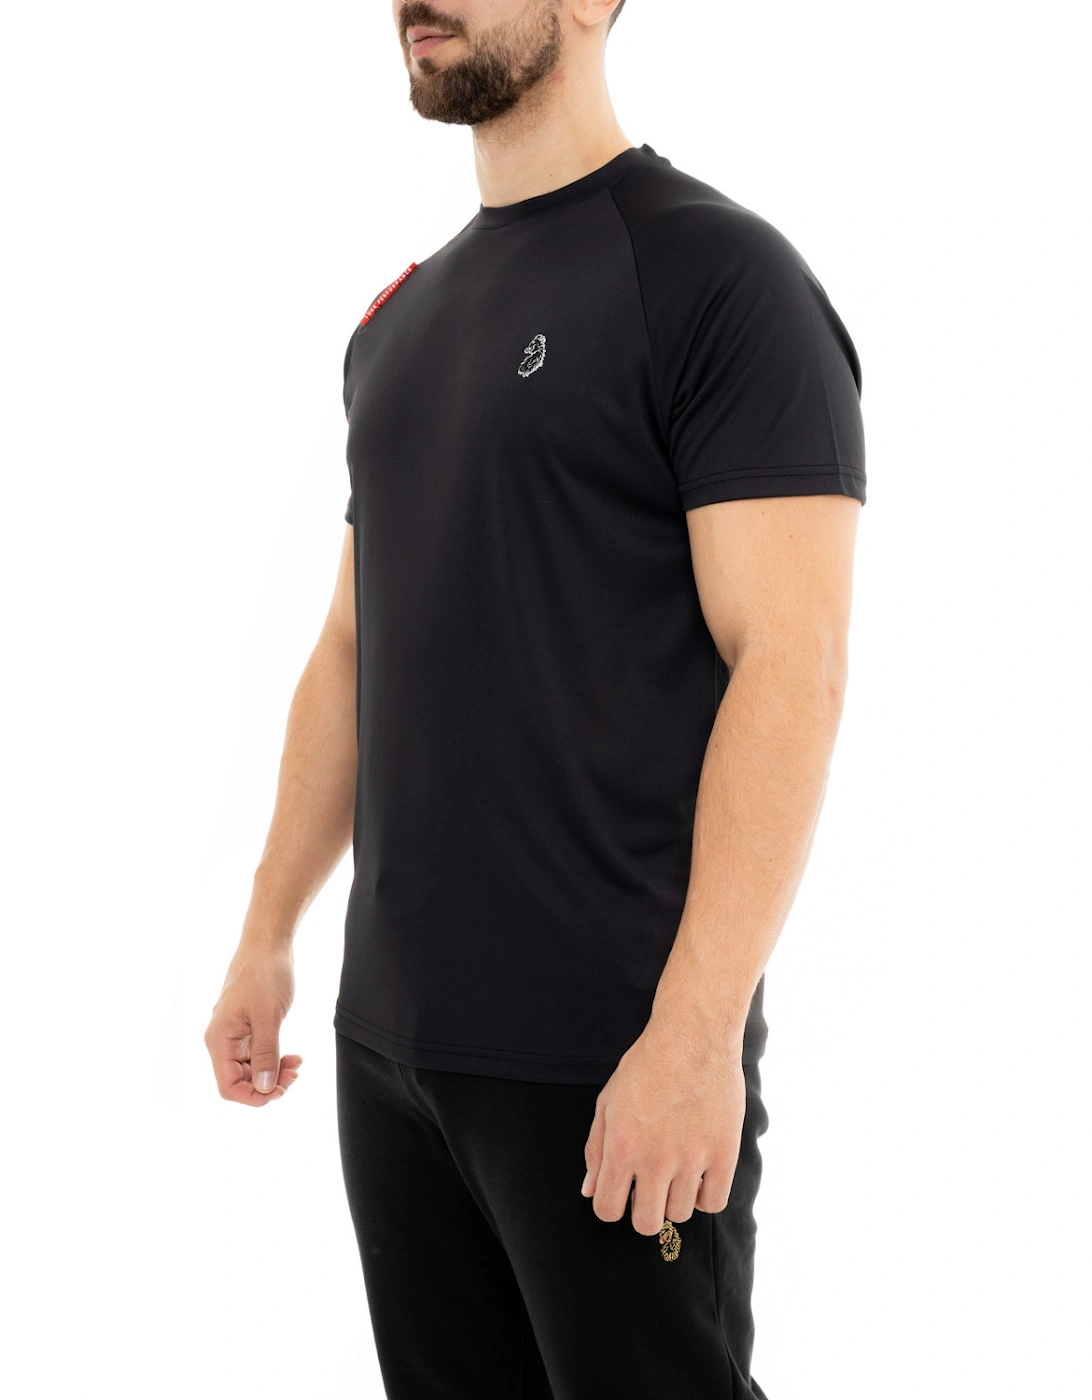 LUKE Mens Sport Crunch Performance Jersey T-shirt (Black)